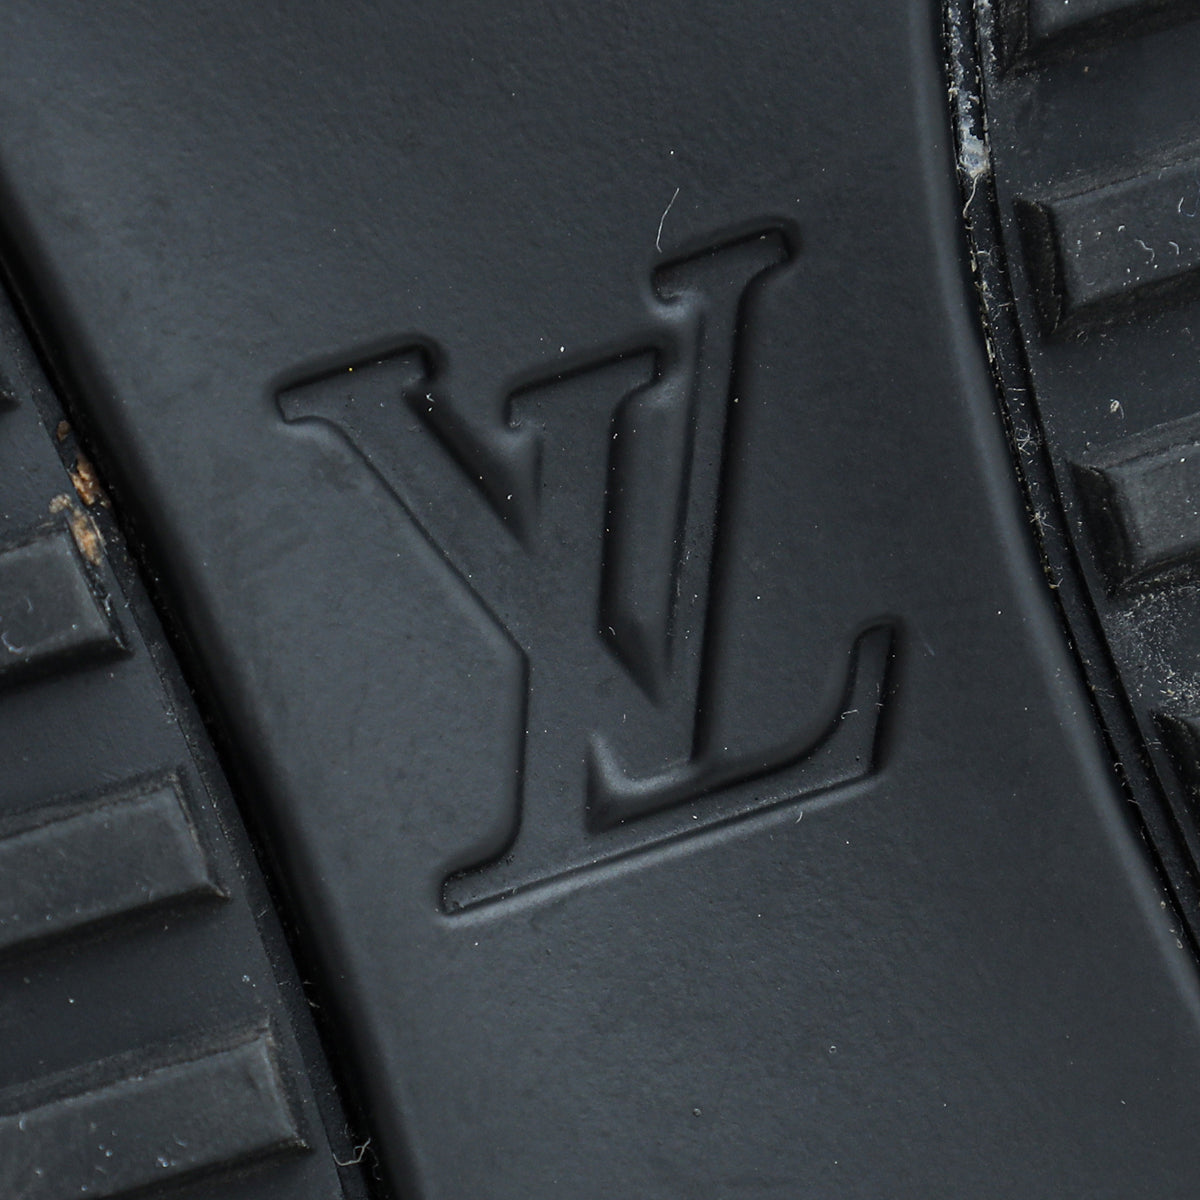 Louis Vuitton Black Iridescent Textile Monogram Mens Run Away Sneakers 7